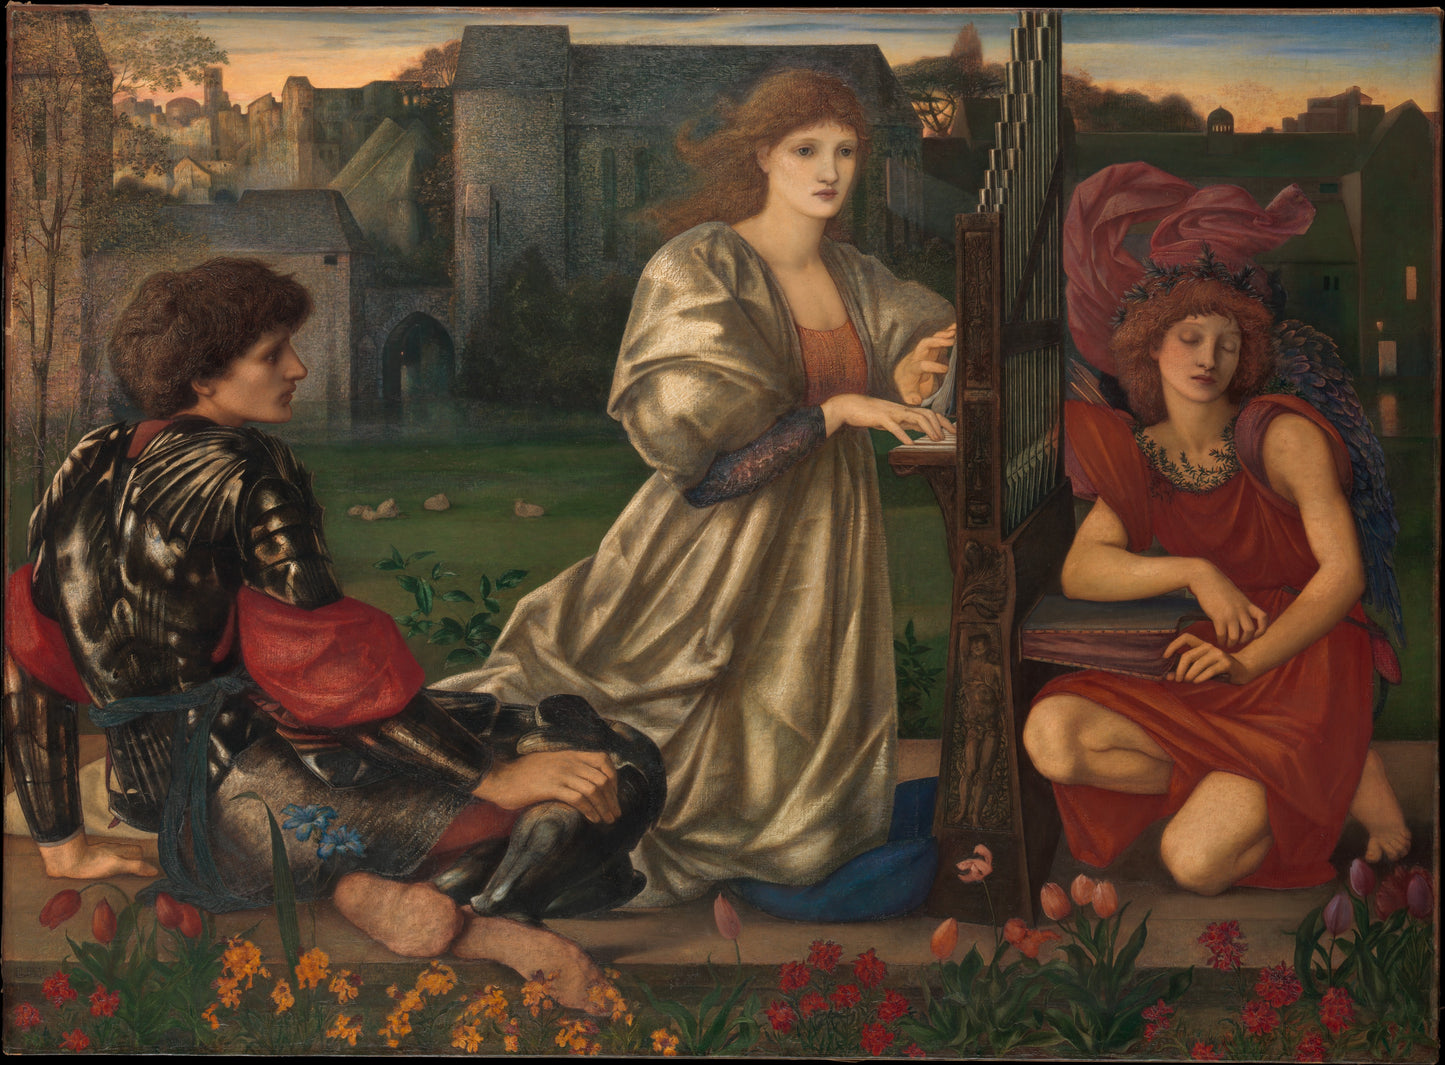 Chain Dangles - Sir Edward Burne-Jones 'The Love Song"